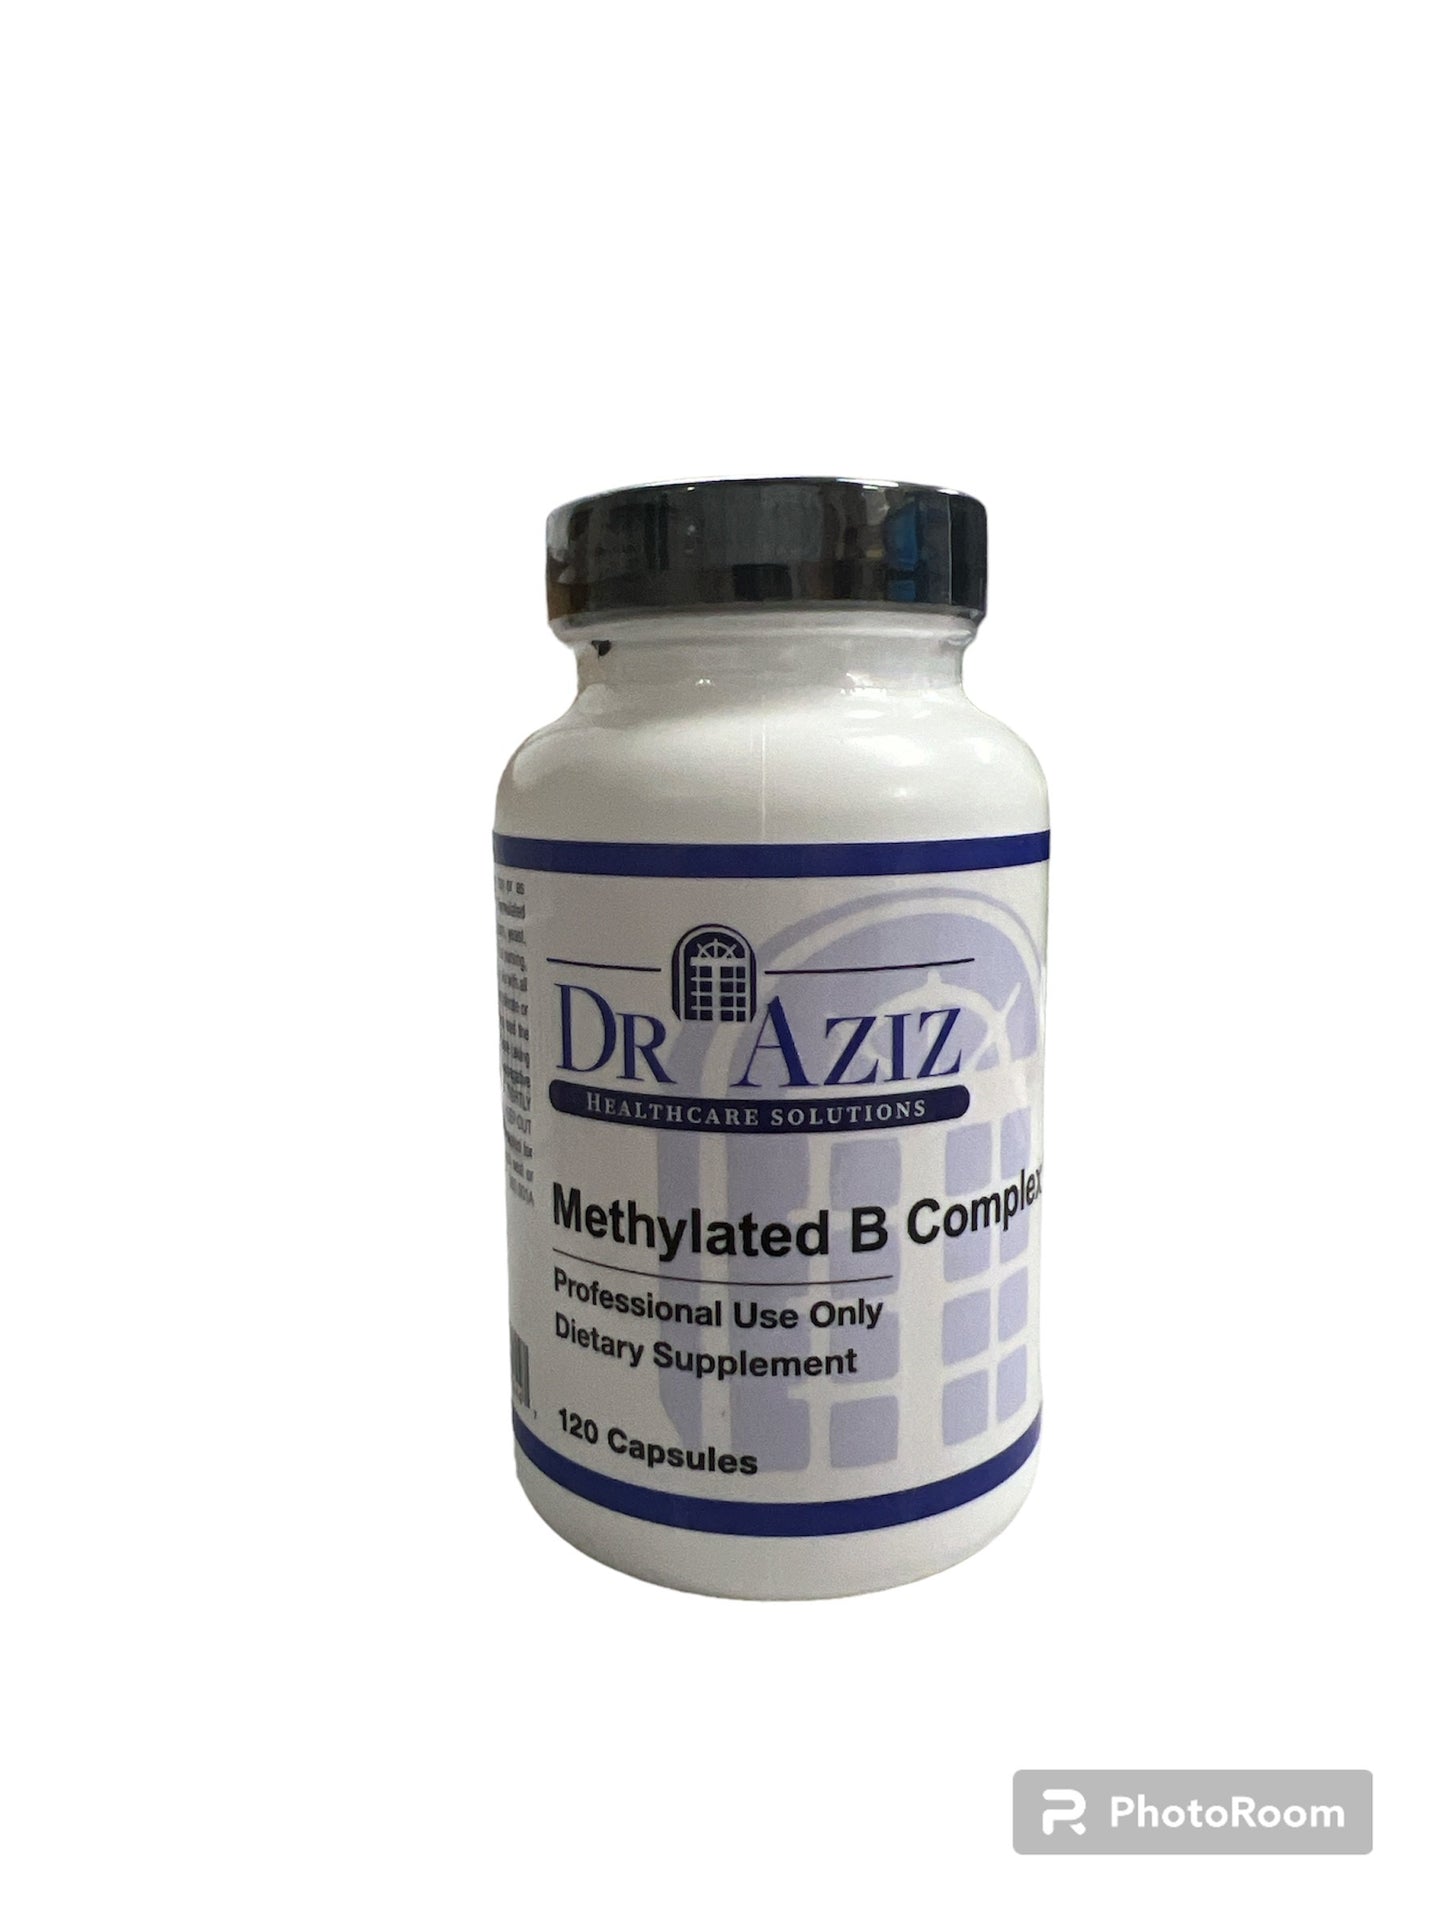 Methylated B Complex|Supports Energy Production, Immune, Cardiovascular and Neurological Health|Dr Aziz Pharmacy